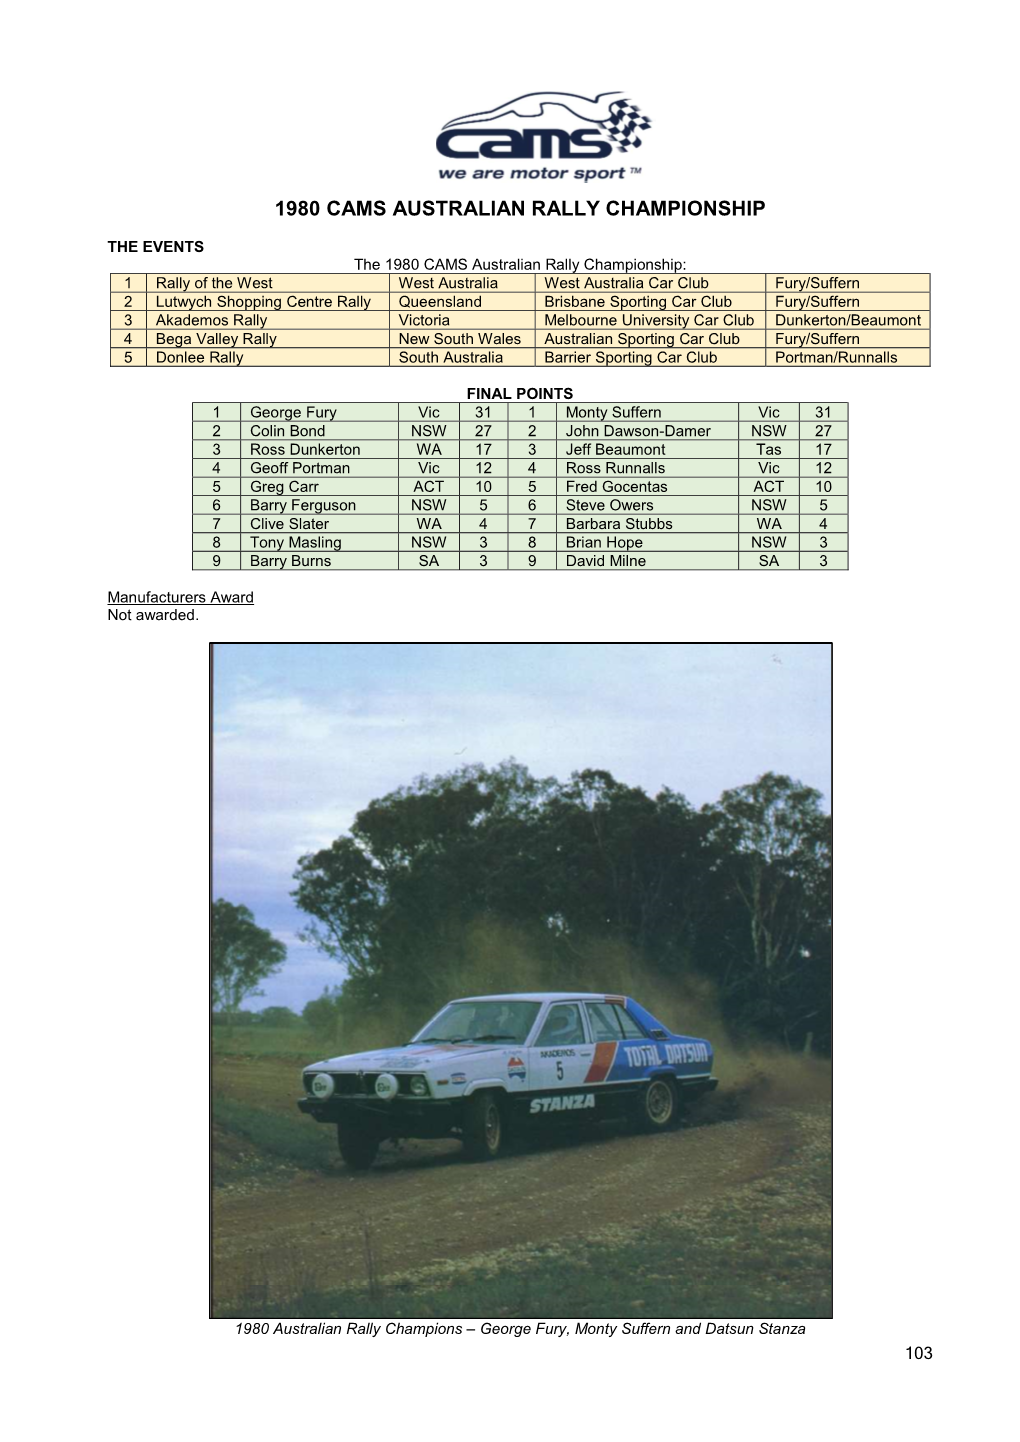 1980 Cams Australian Rally Championship